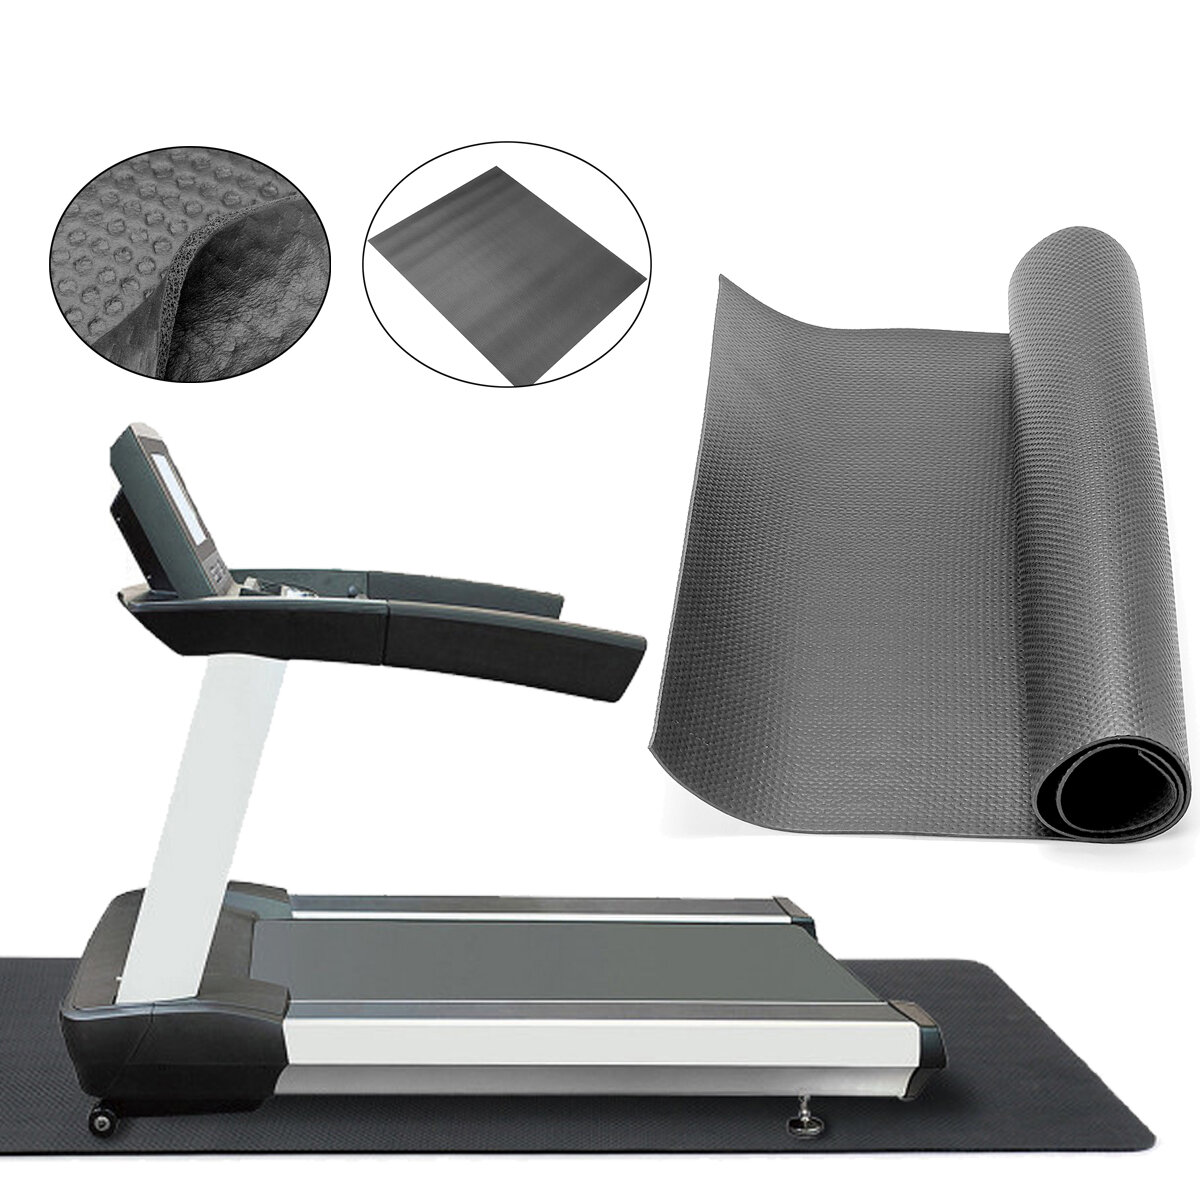 

85x60cm Multifunction Exercise Mat Gym Fitness Equipment Treadmill Bike Protect Floor Mat Running Machine Shock Absorbin